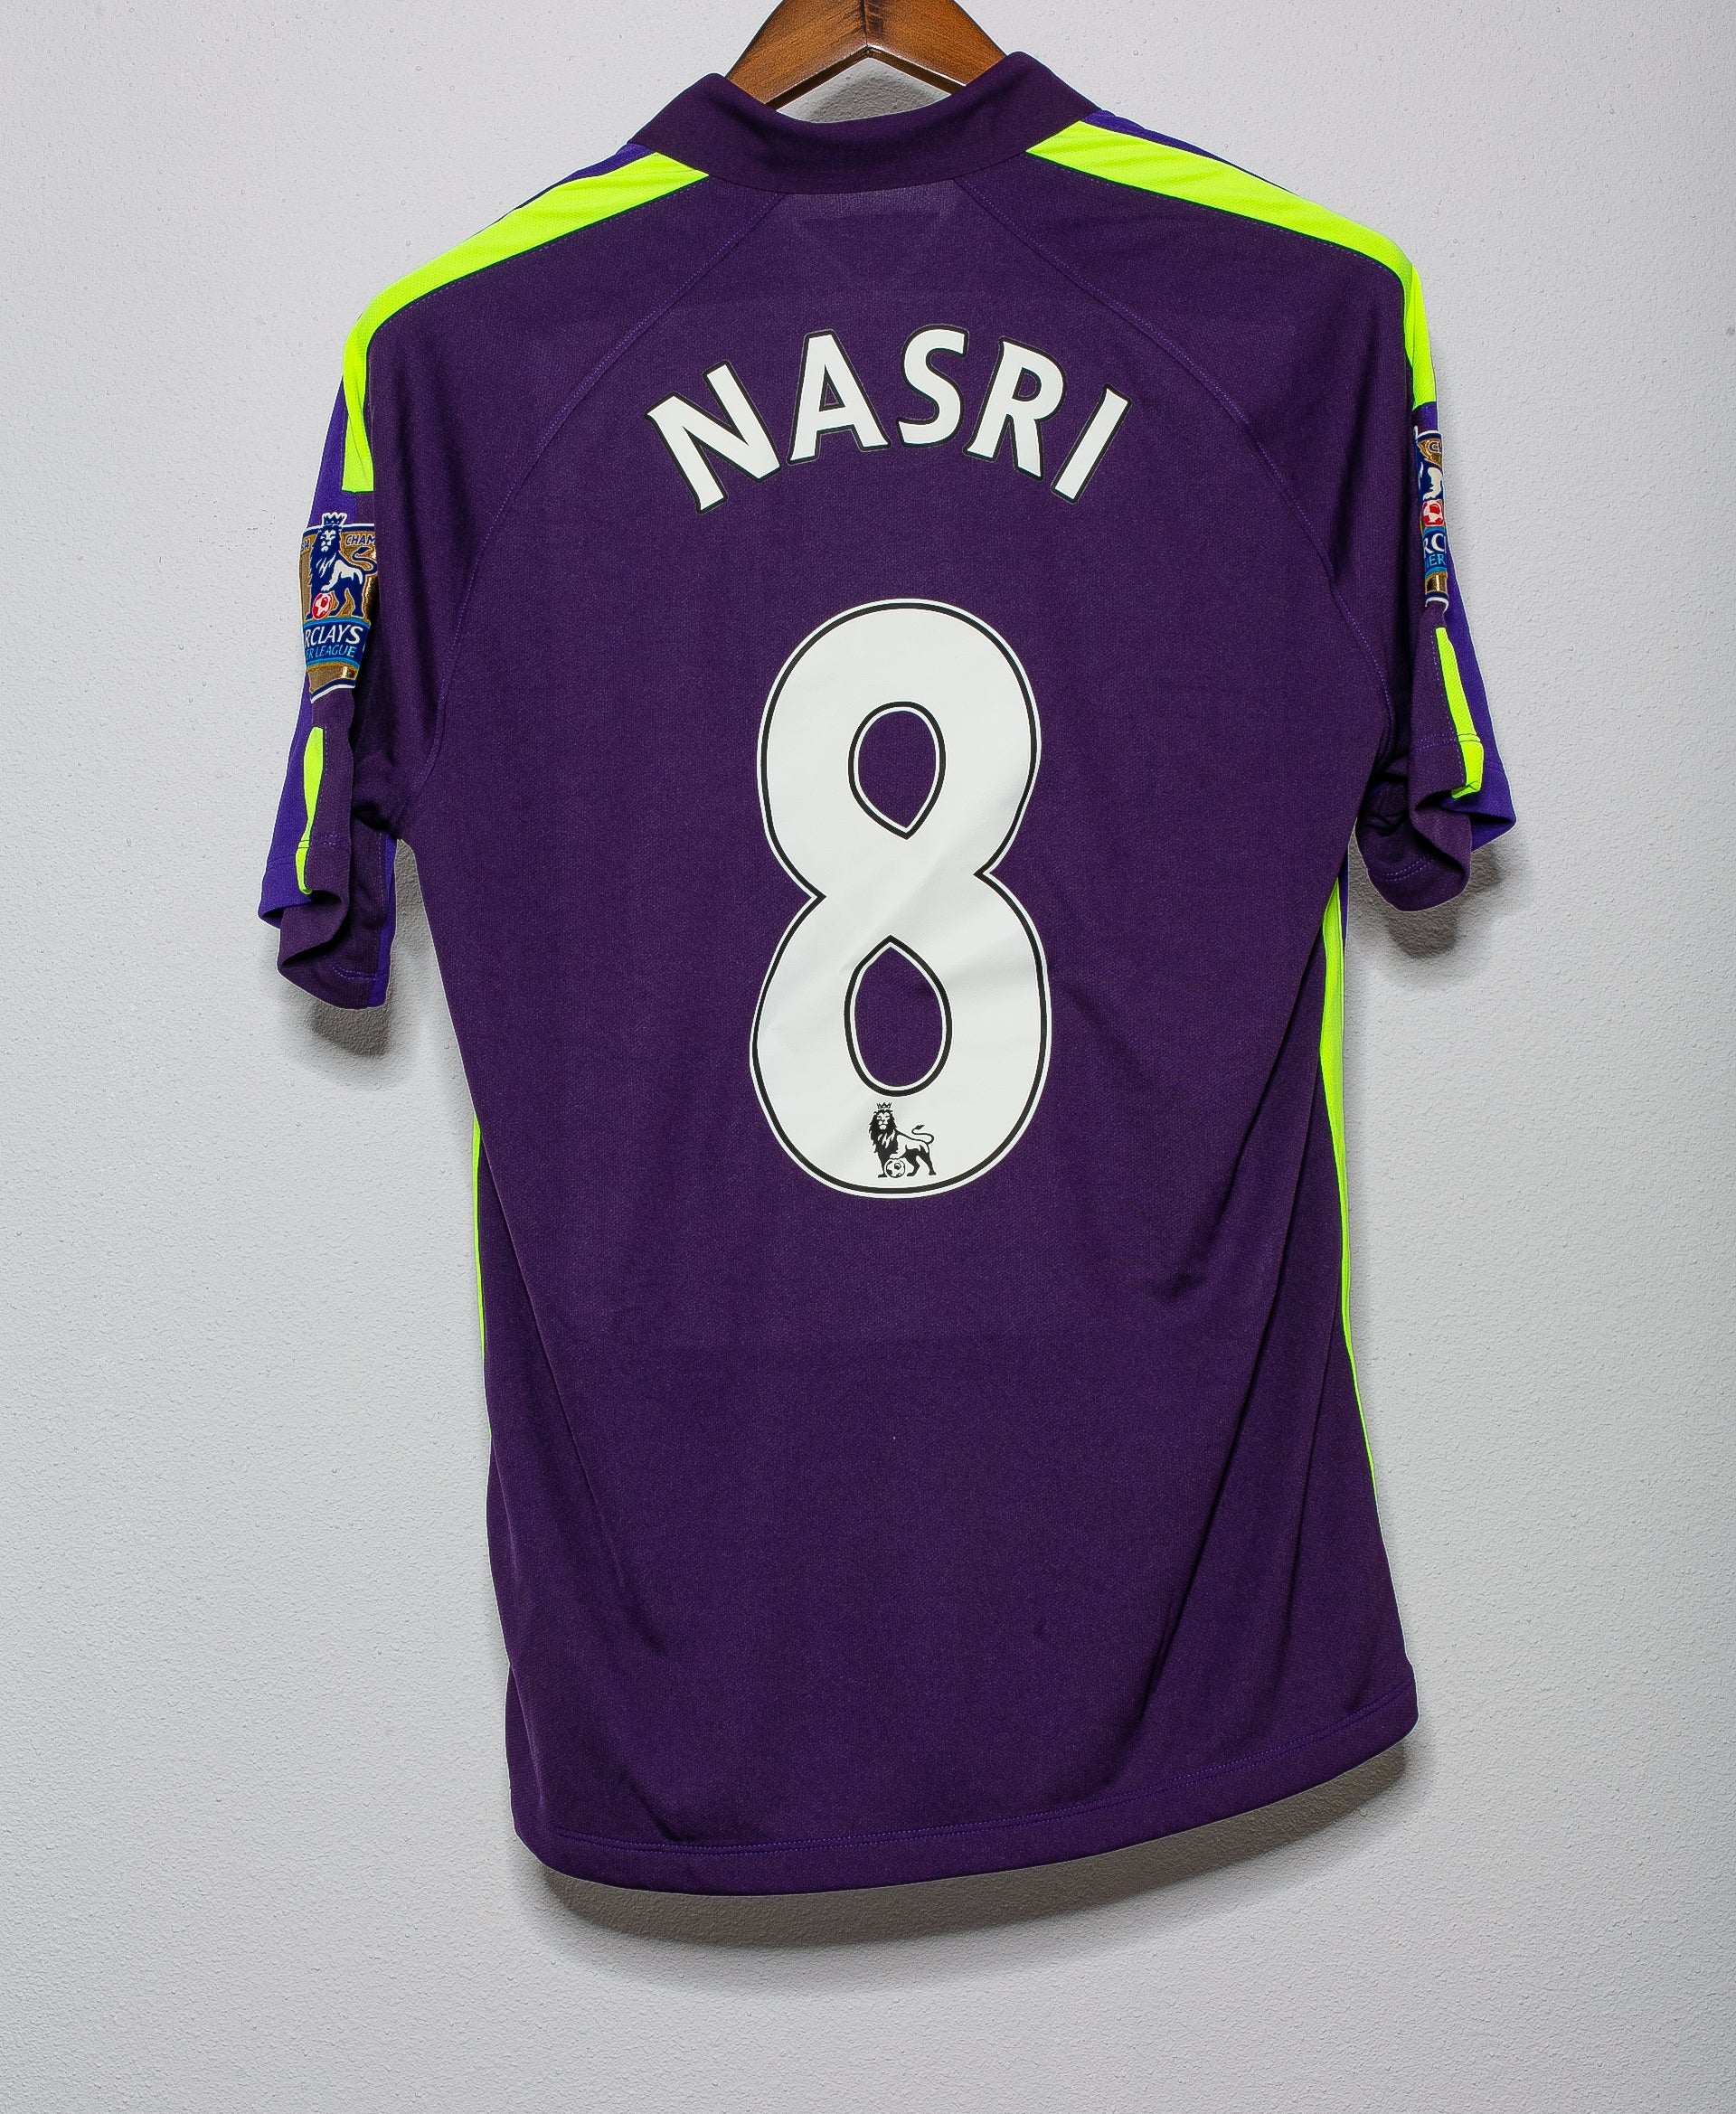 Manchester City No8 Nasri Sec Away Soccer Club Jersey